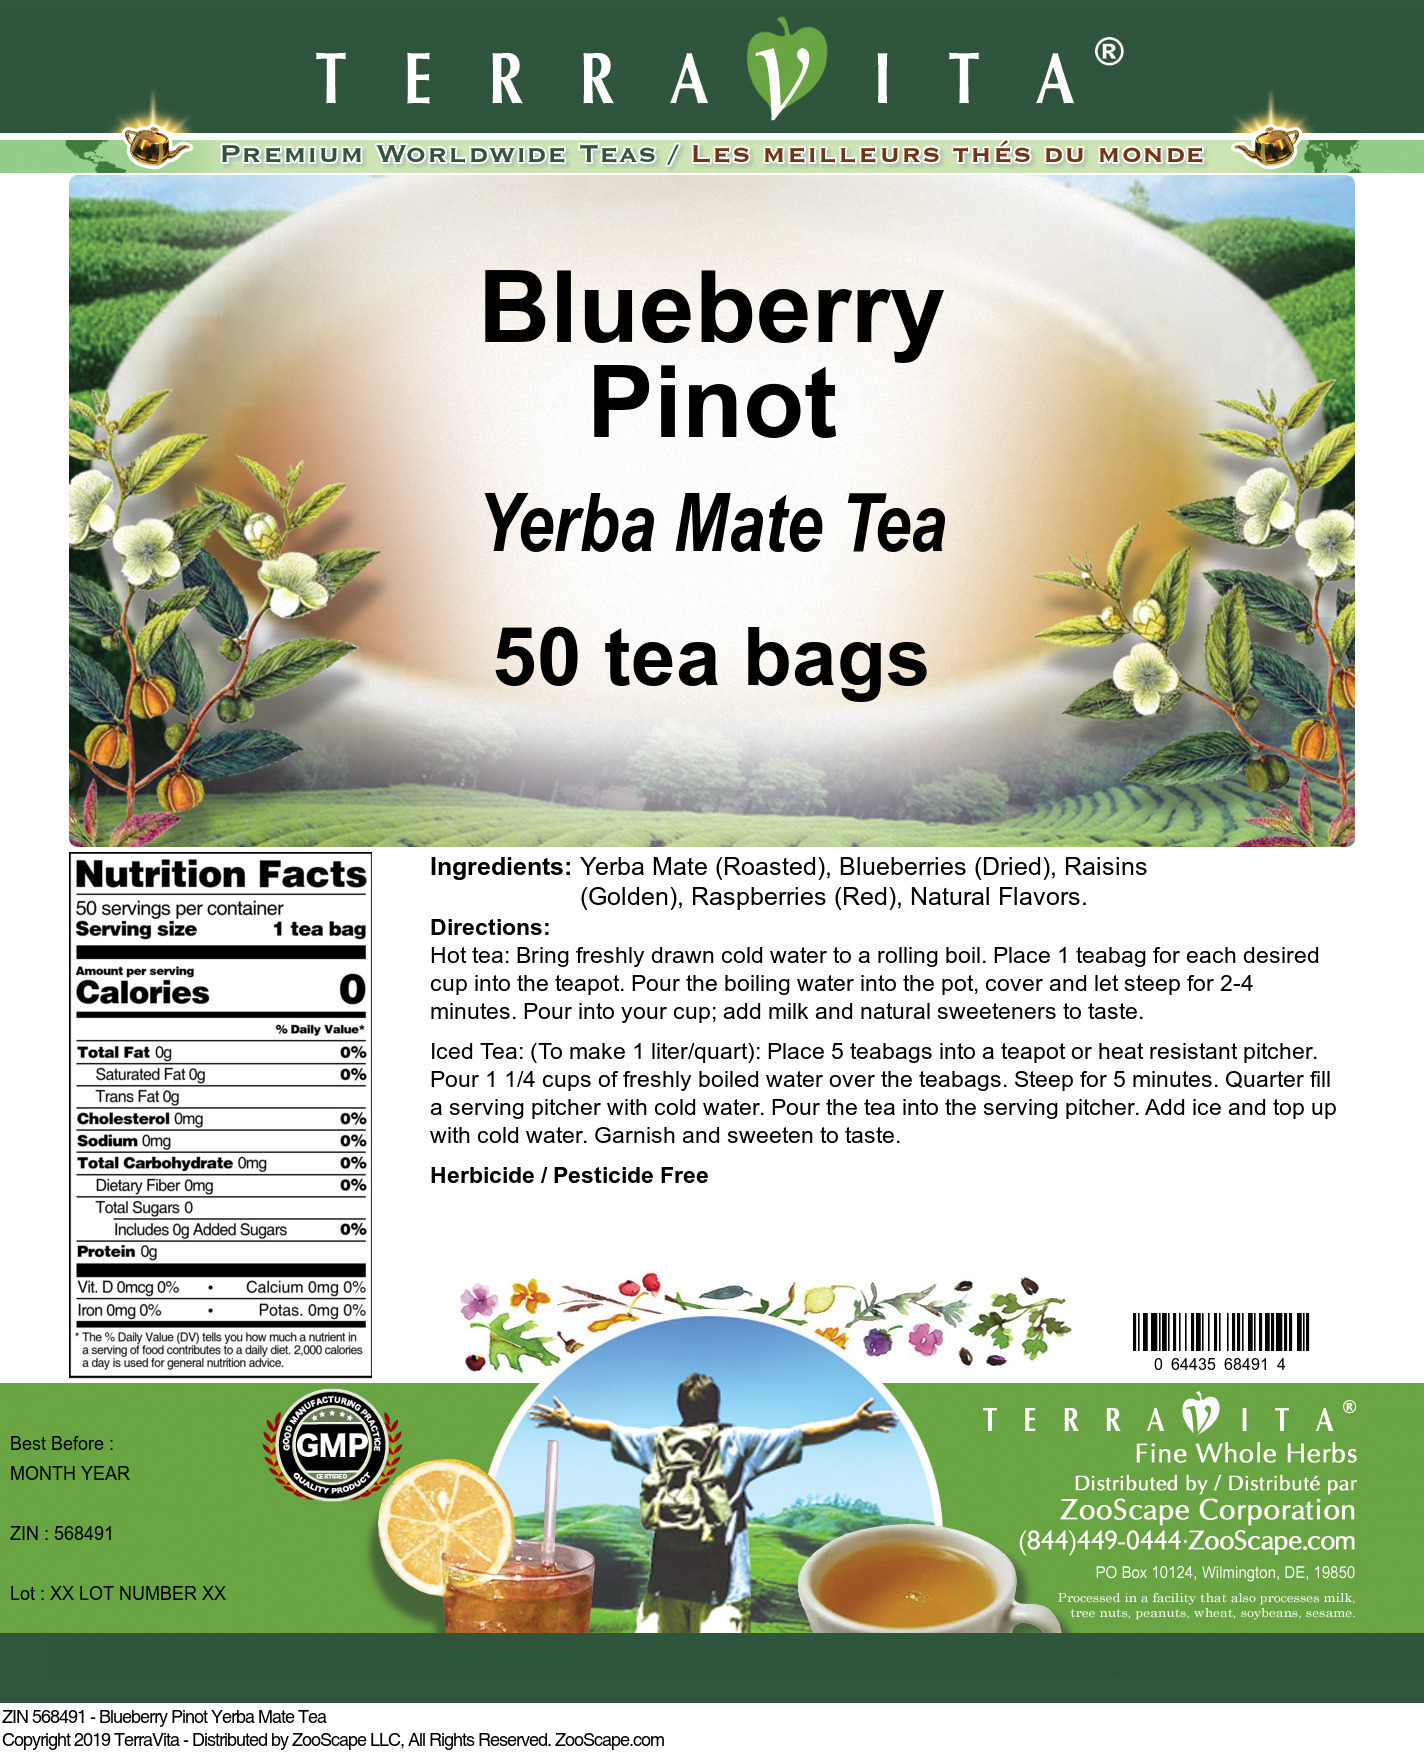 Blueberry Pinot Yerba Mate Tea - Label